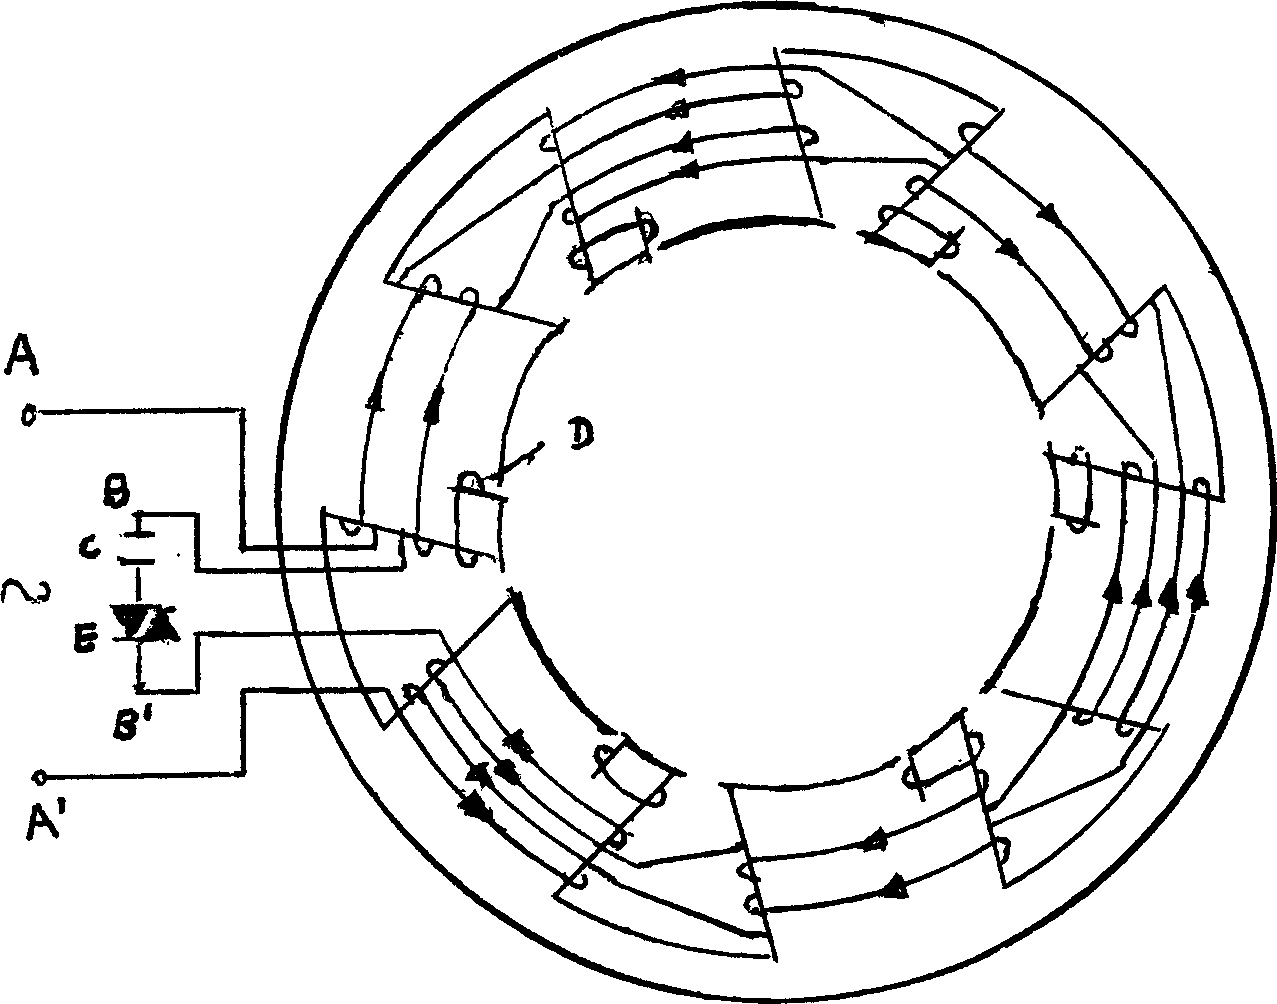 Single-phase transformer asynchronous motor